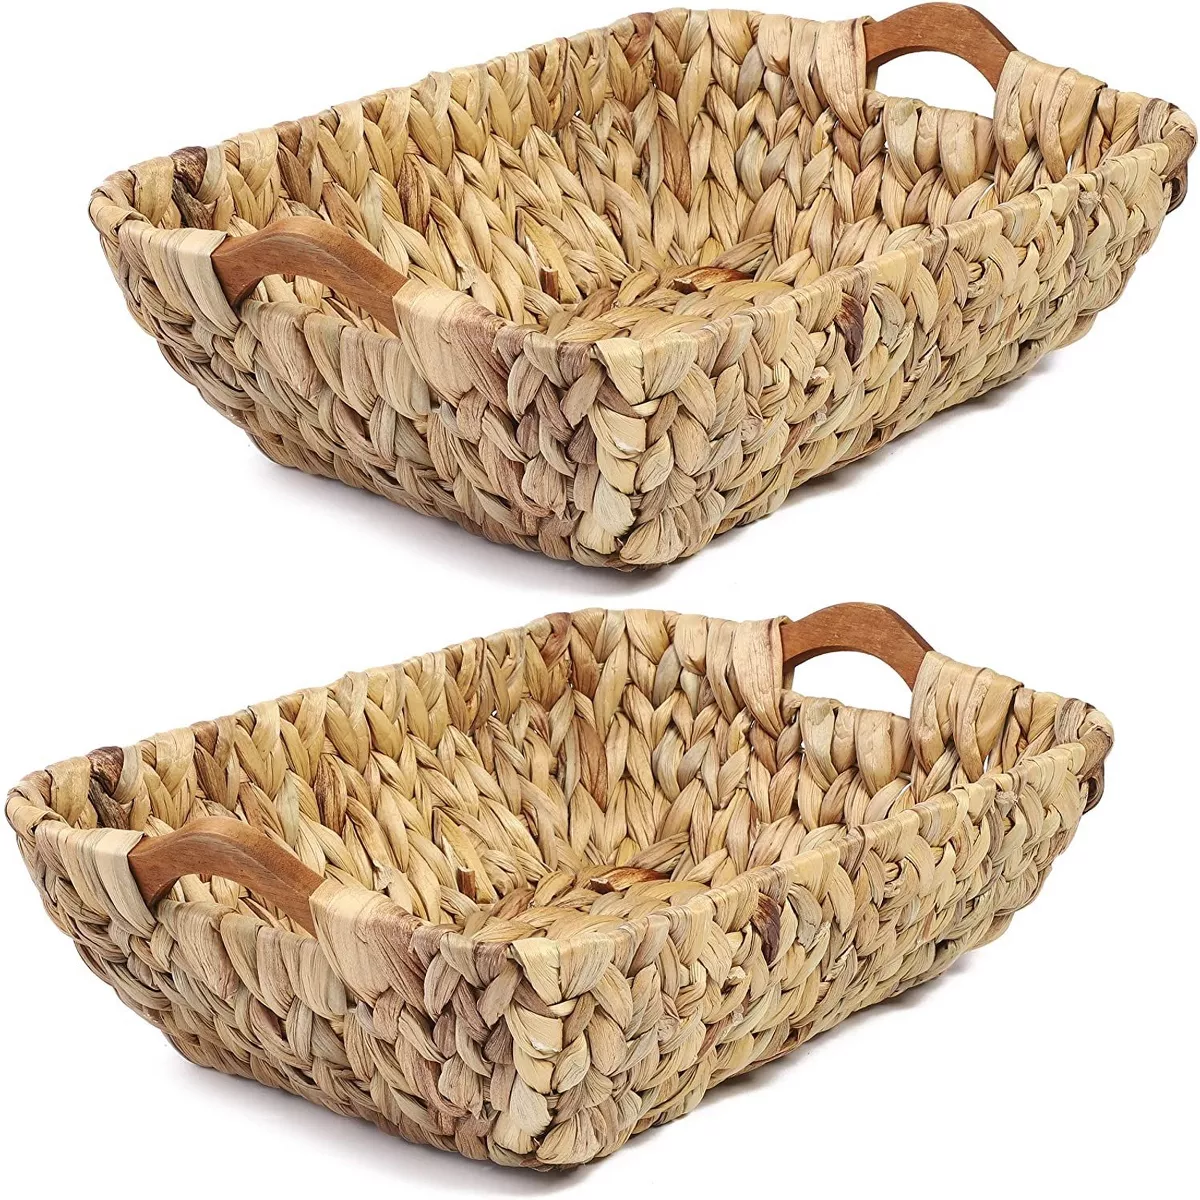 Wicker Bathroom Storage Baskets